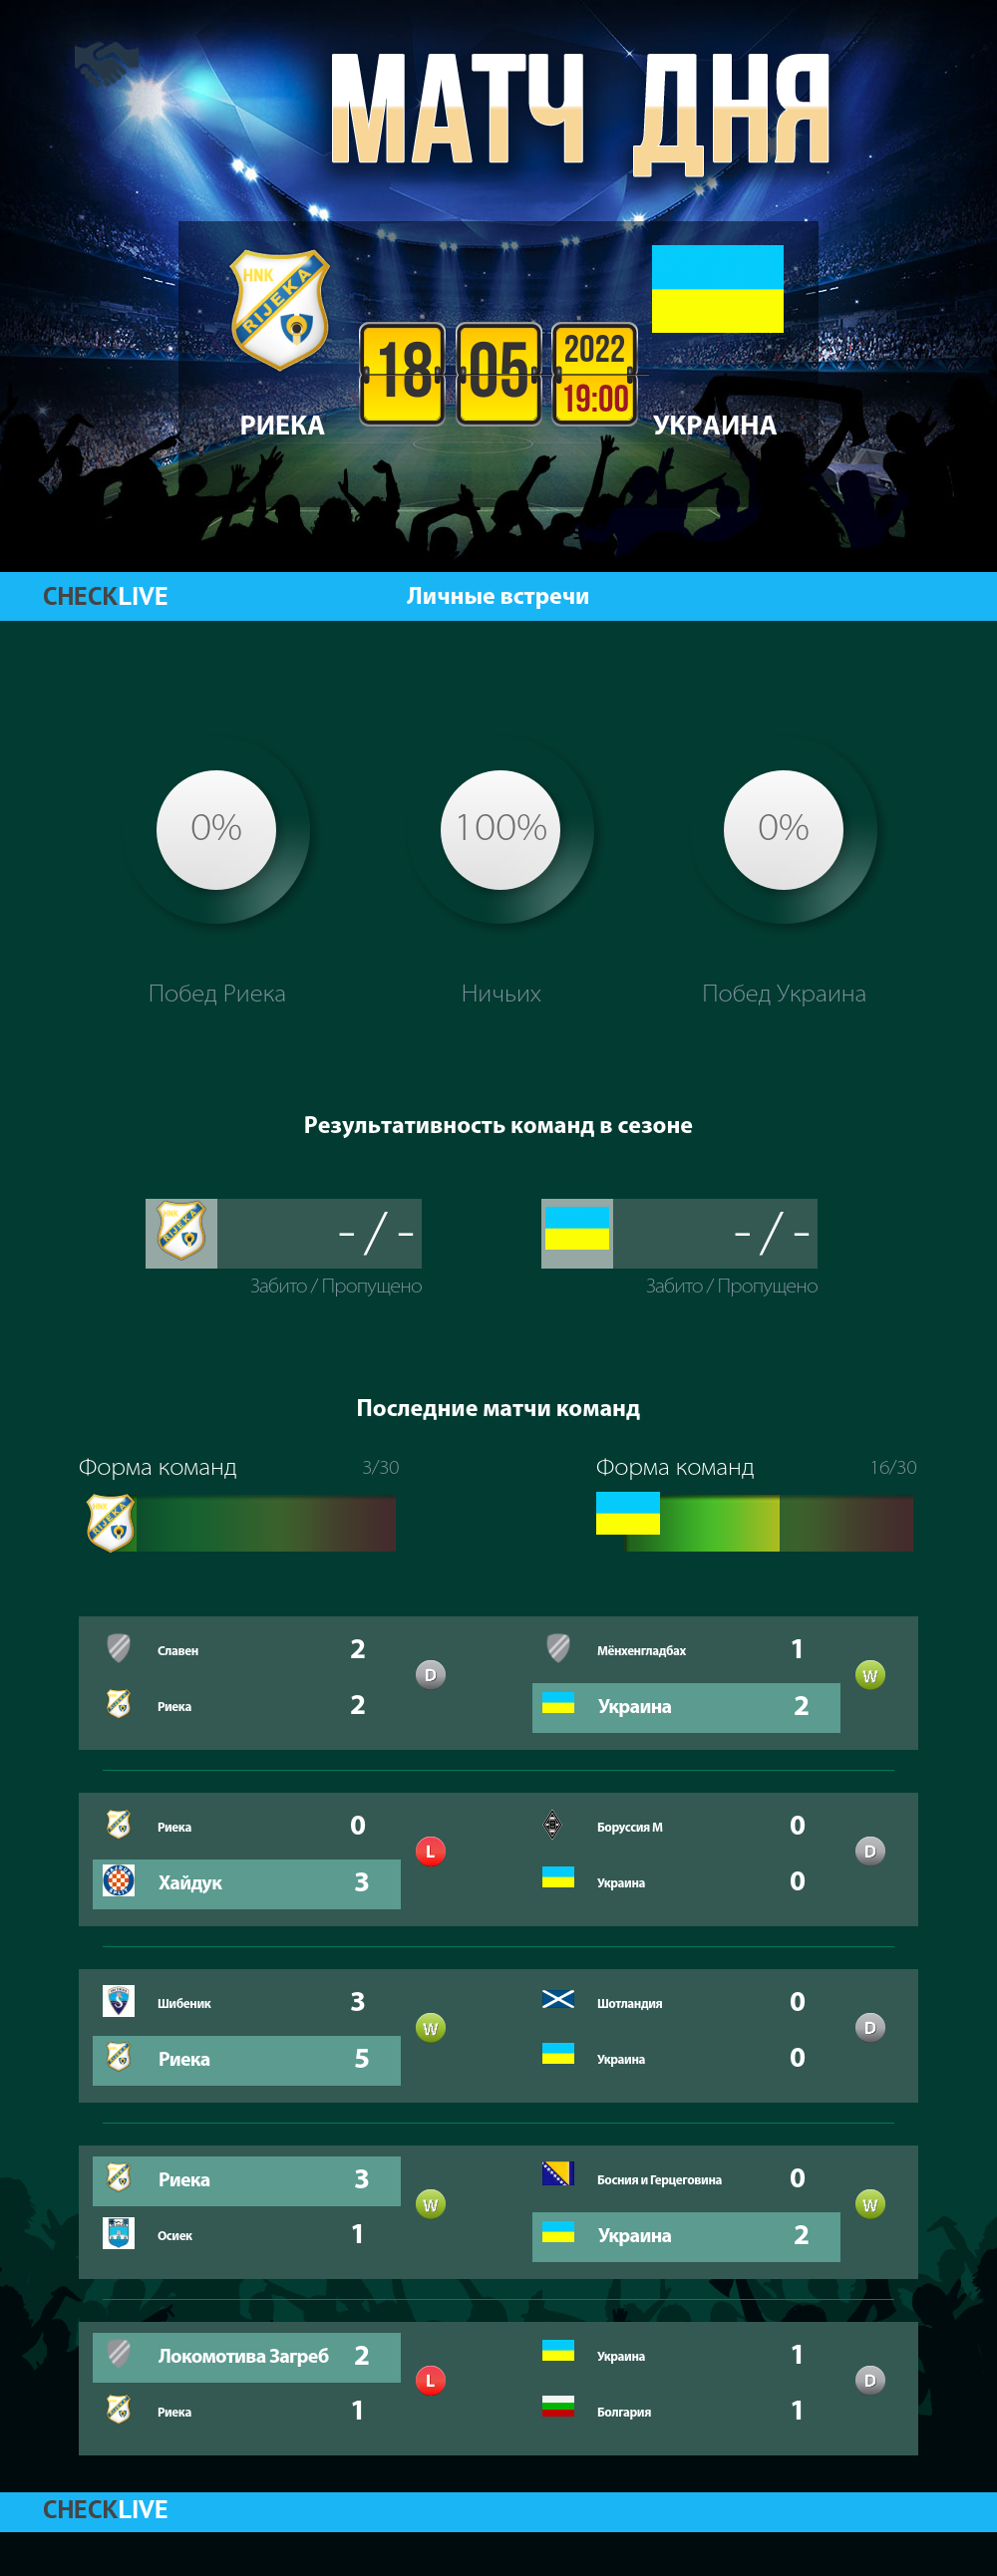 Инфографика Риека и Украина матч дня 18.05.2022